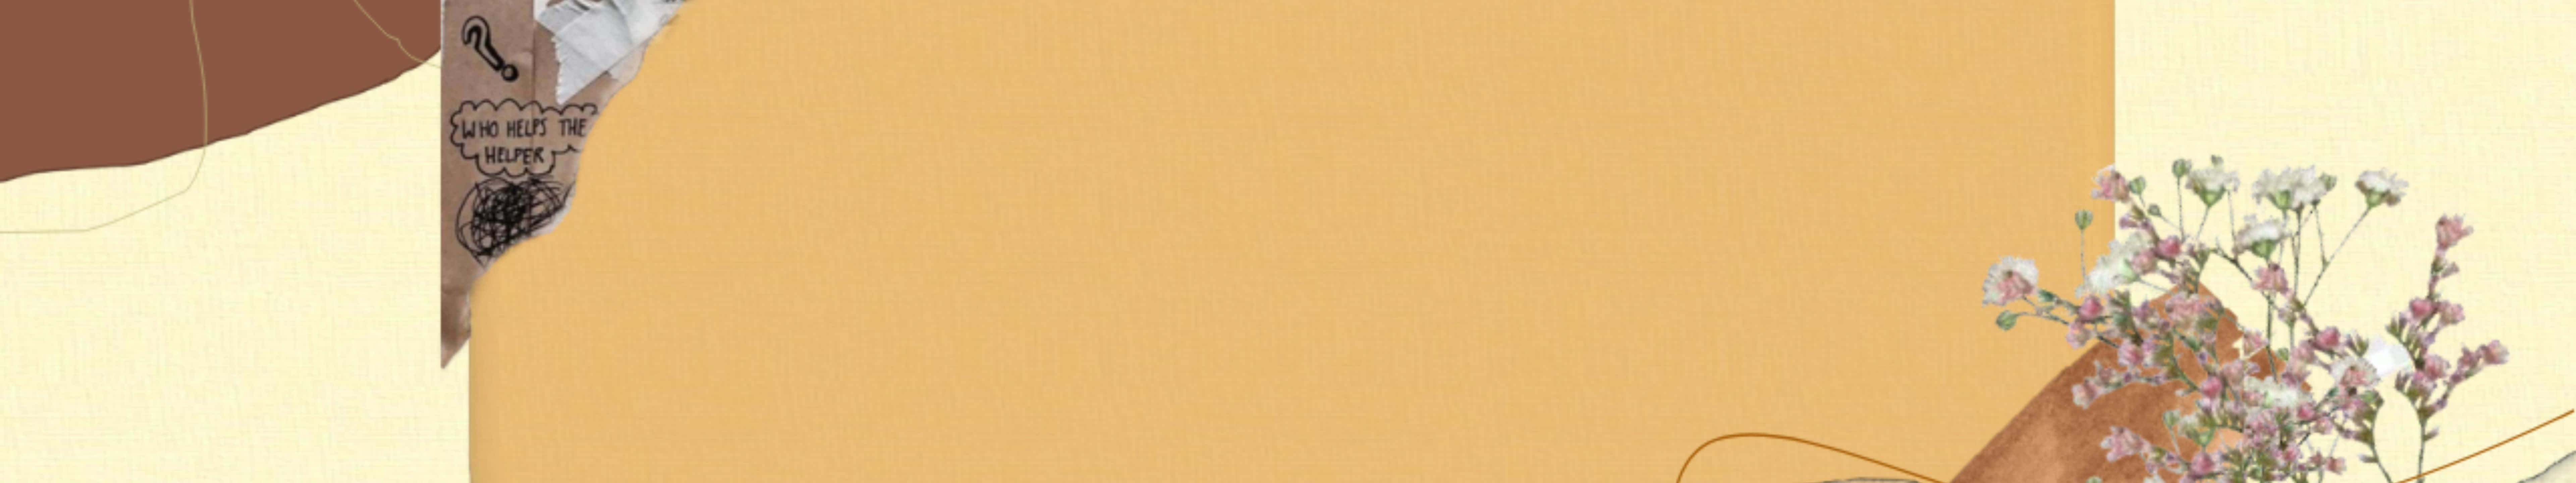 7680 X 1440 Wideskærm Pastelfarvede Skyer Wallpaper